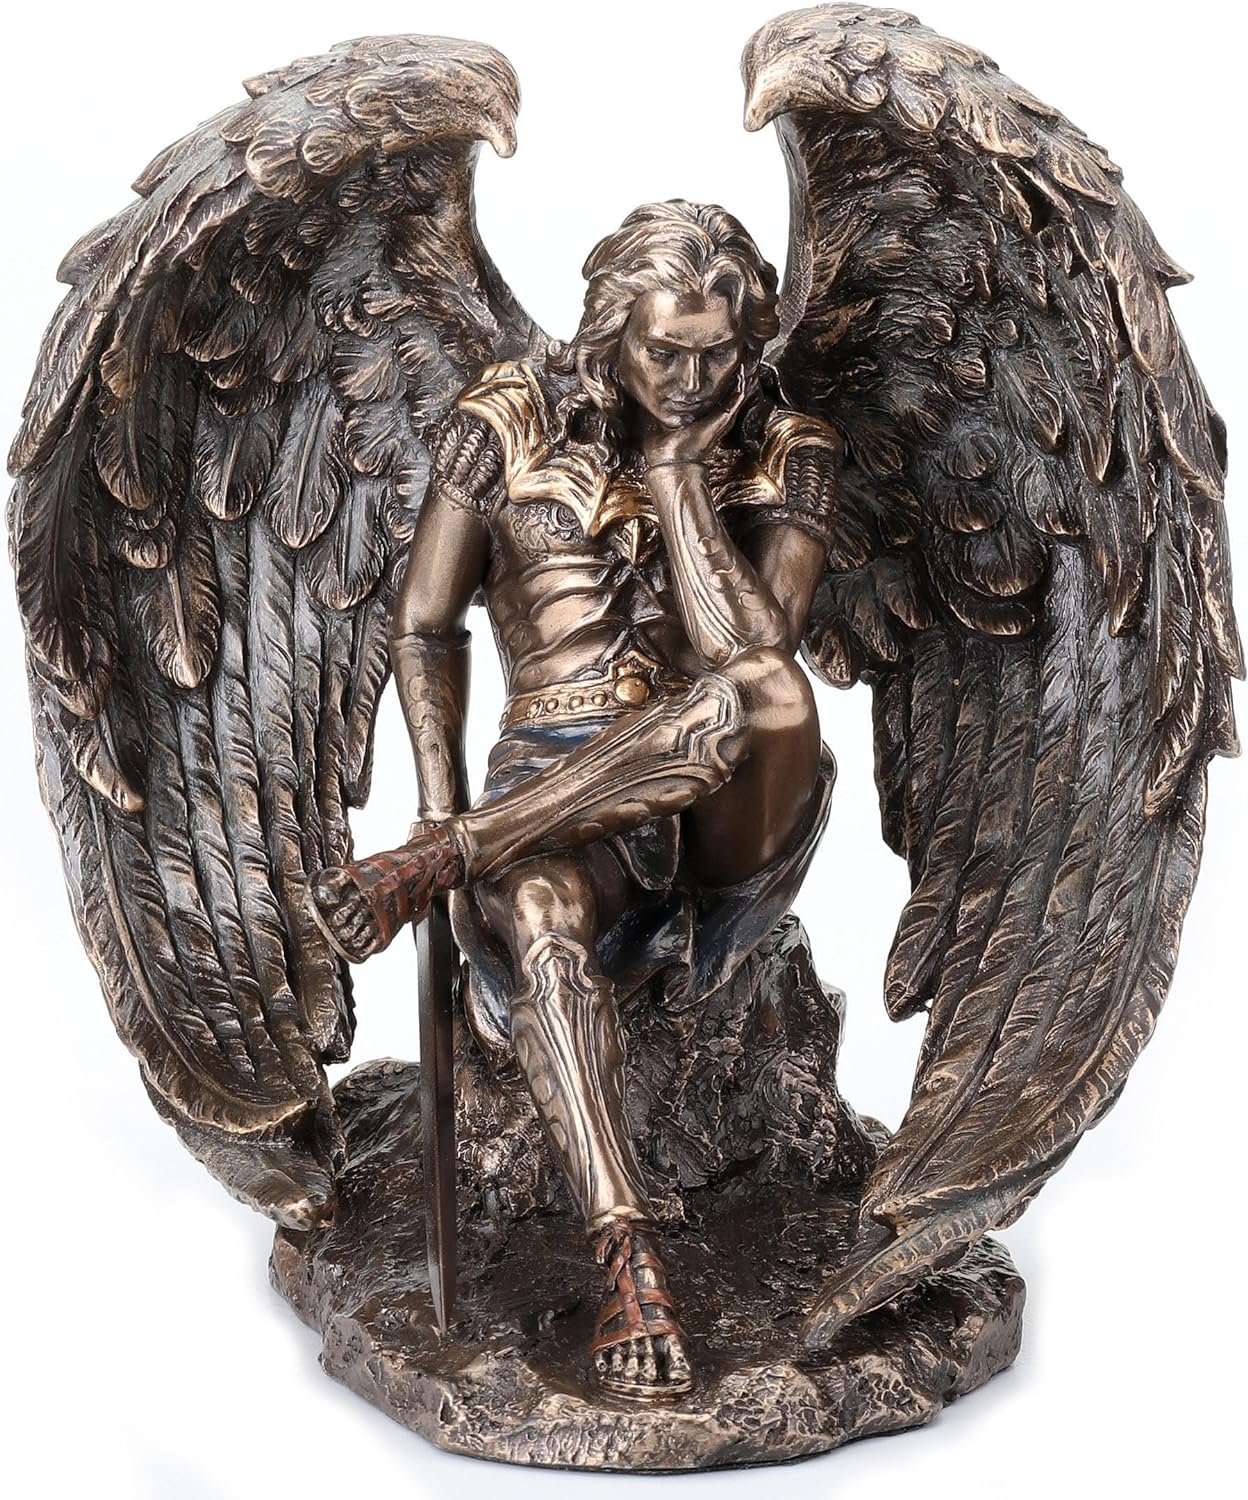 Lucifer The Fallen Angel Figurine